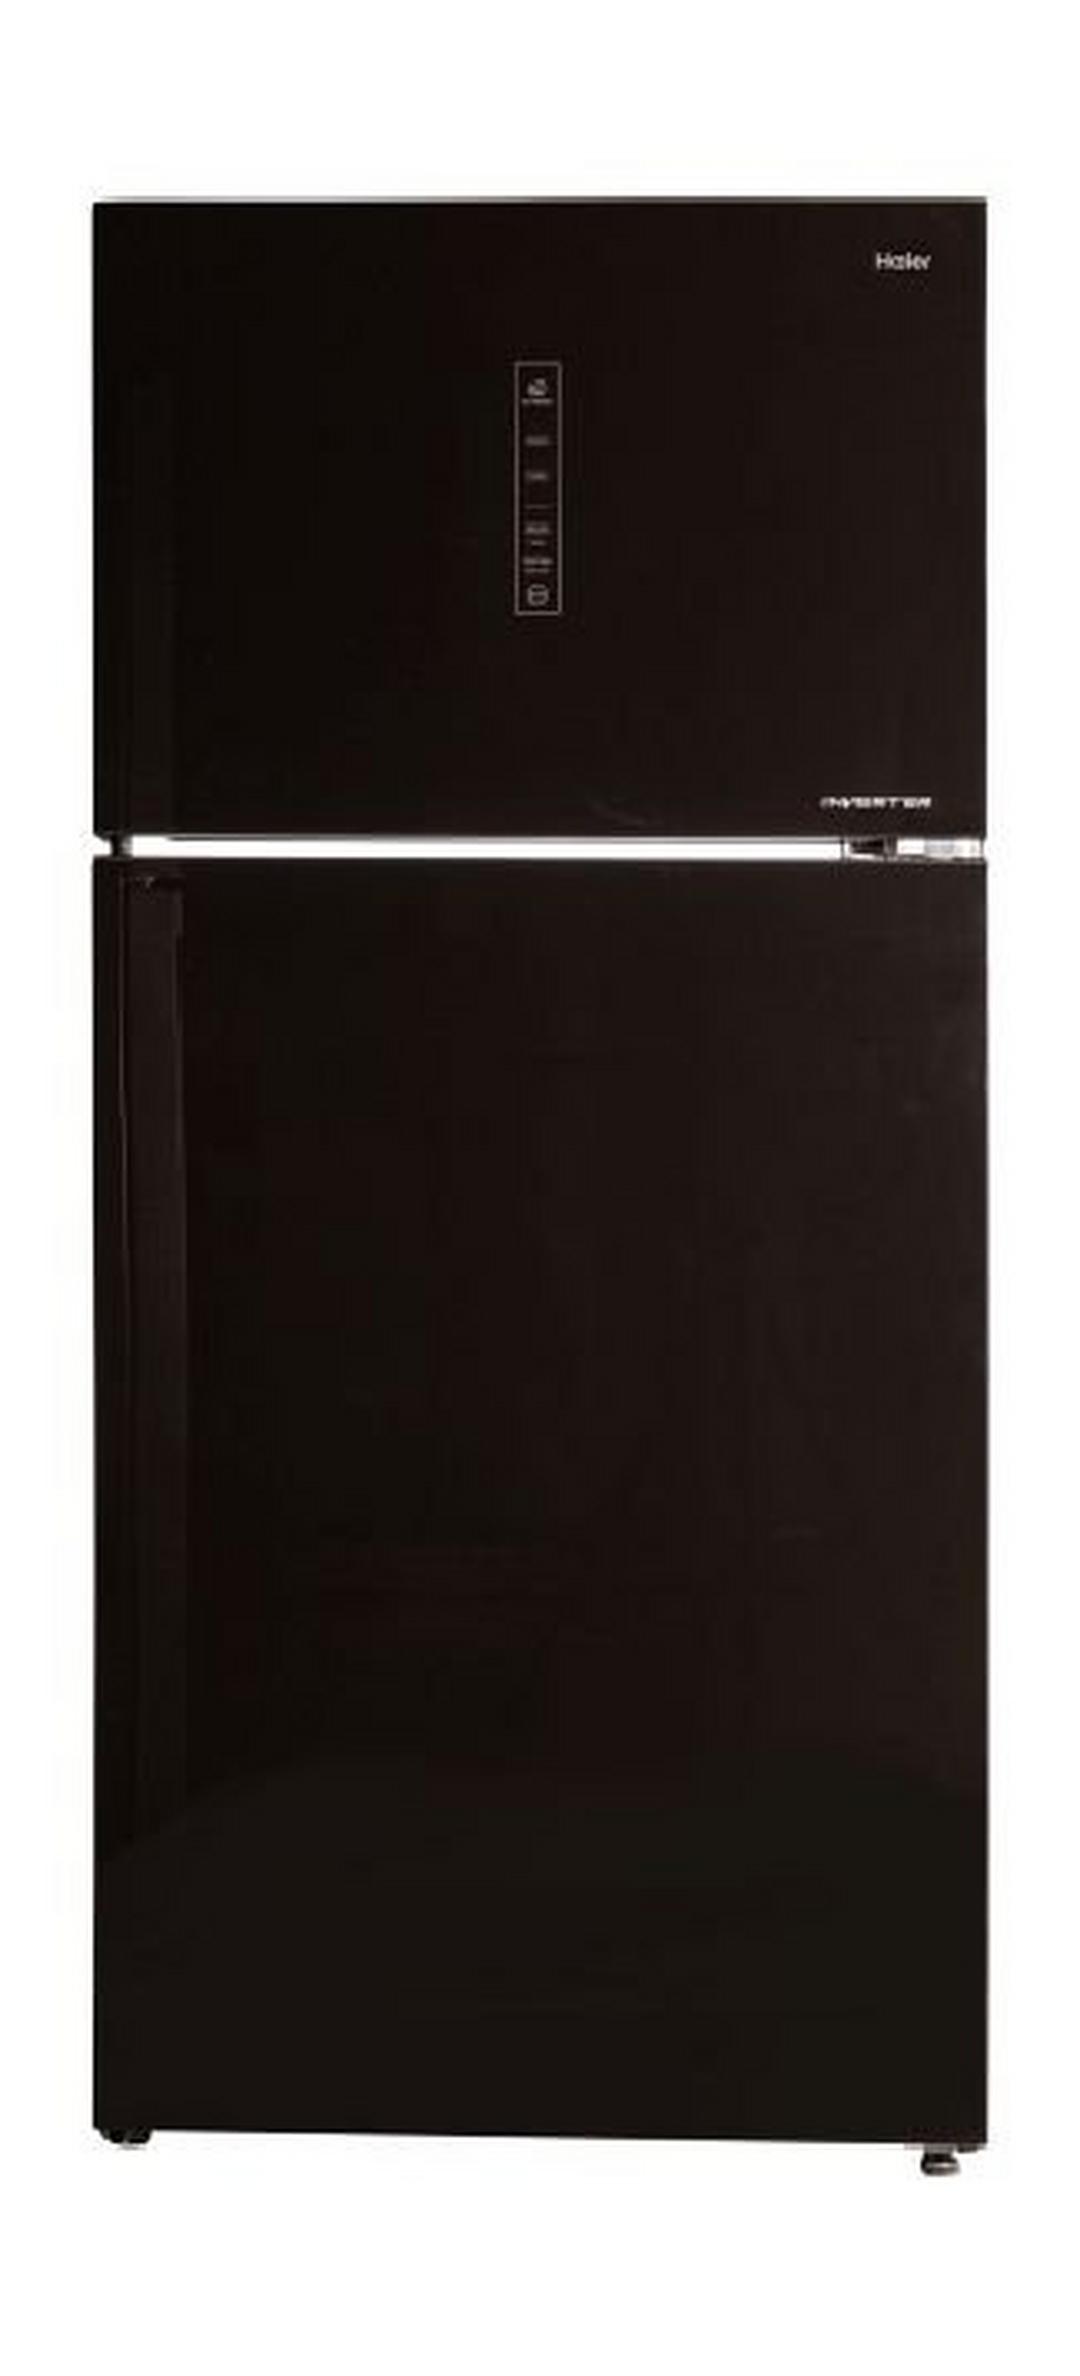 Haier 28CFT Top Mount Refrigerator (HRF-780FGPI GB) - Black